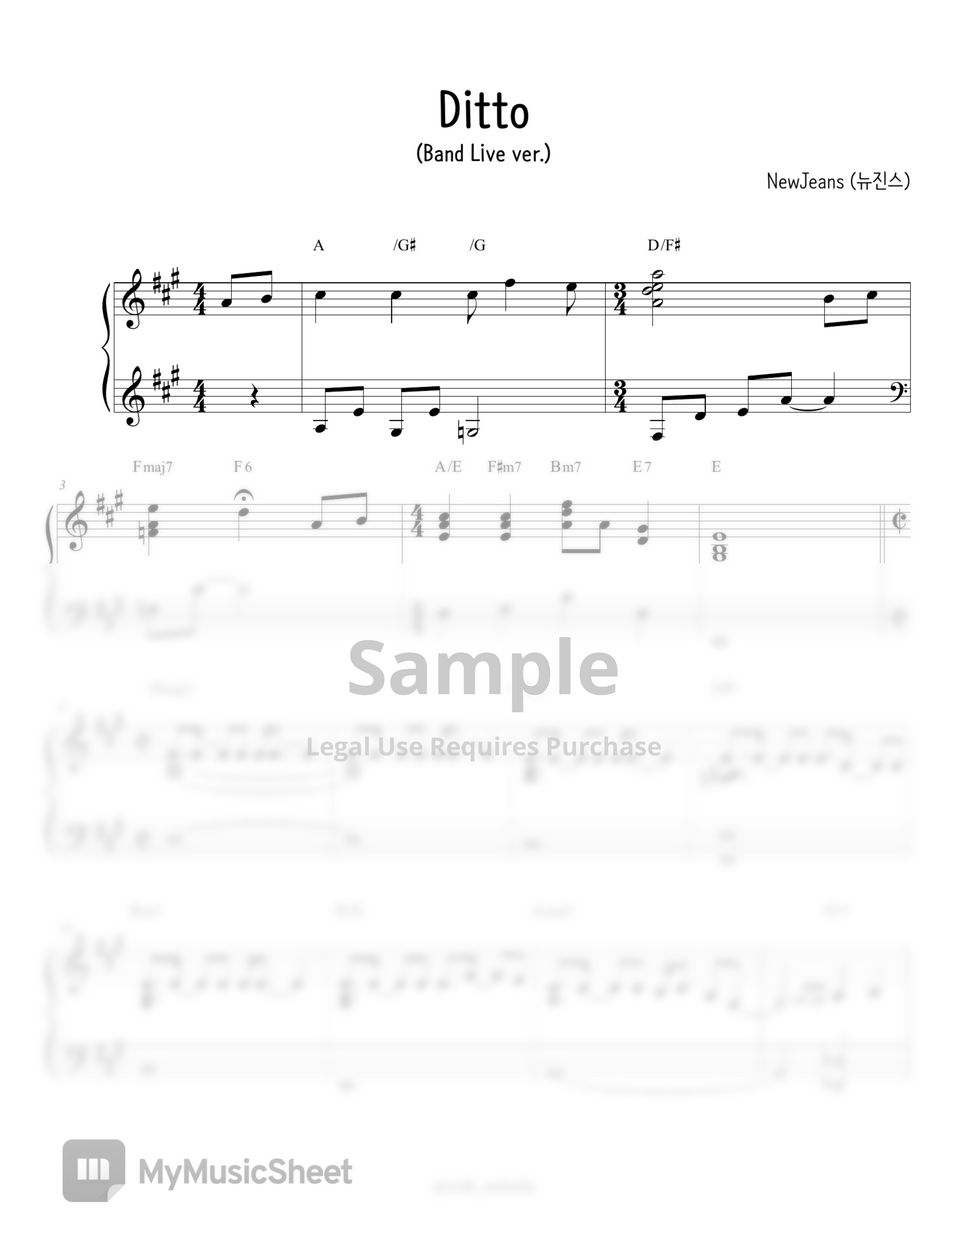 Ditto – NewJeans Ditto Sheet music for Piano (Solo)